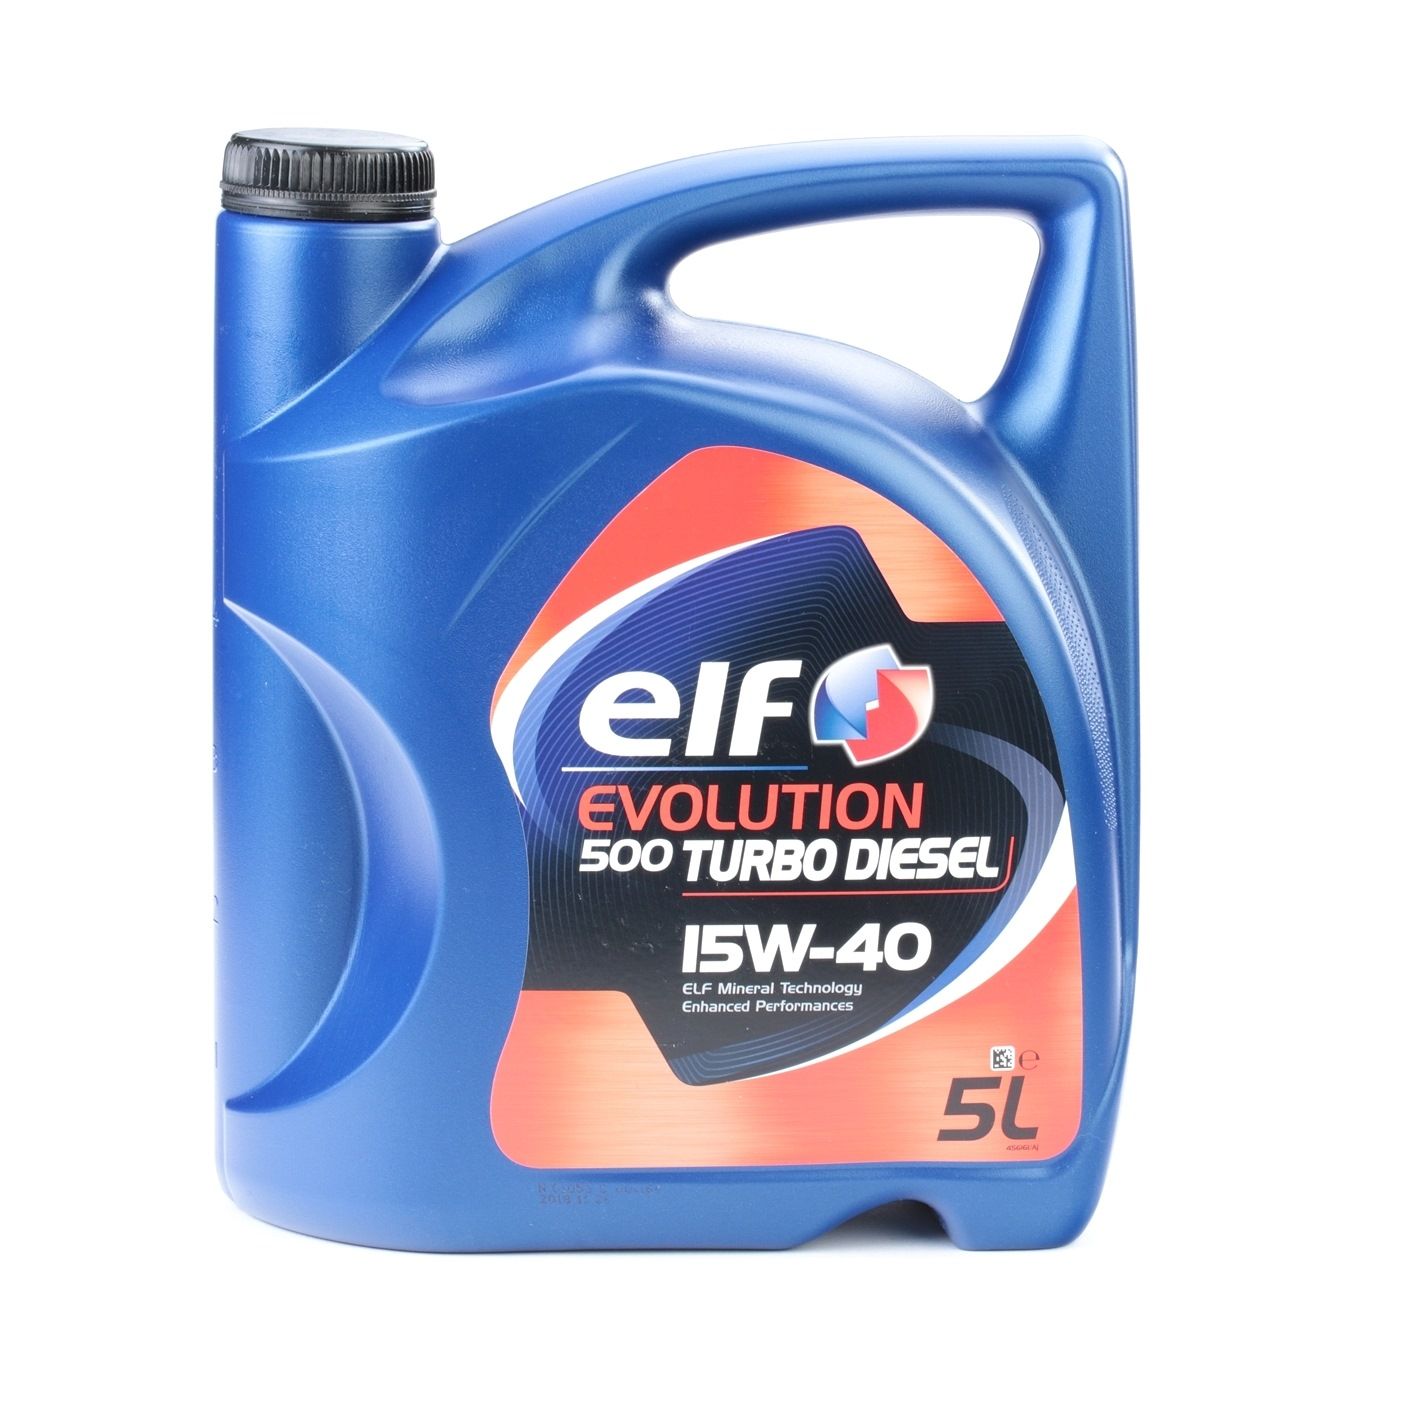 Kaufen Motoröl ELF 2196568 Evolution, 500 Turbo Diesel 15W-40, 5l, Mineralöl